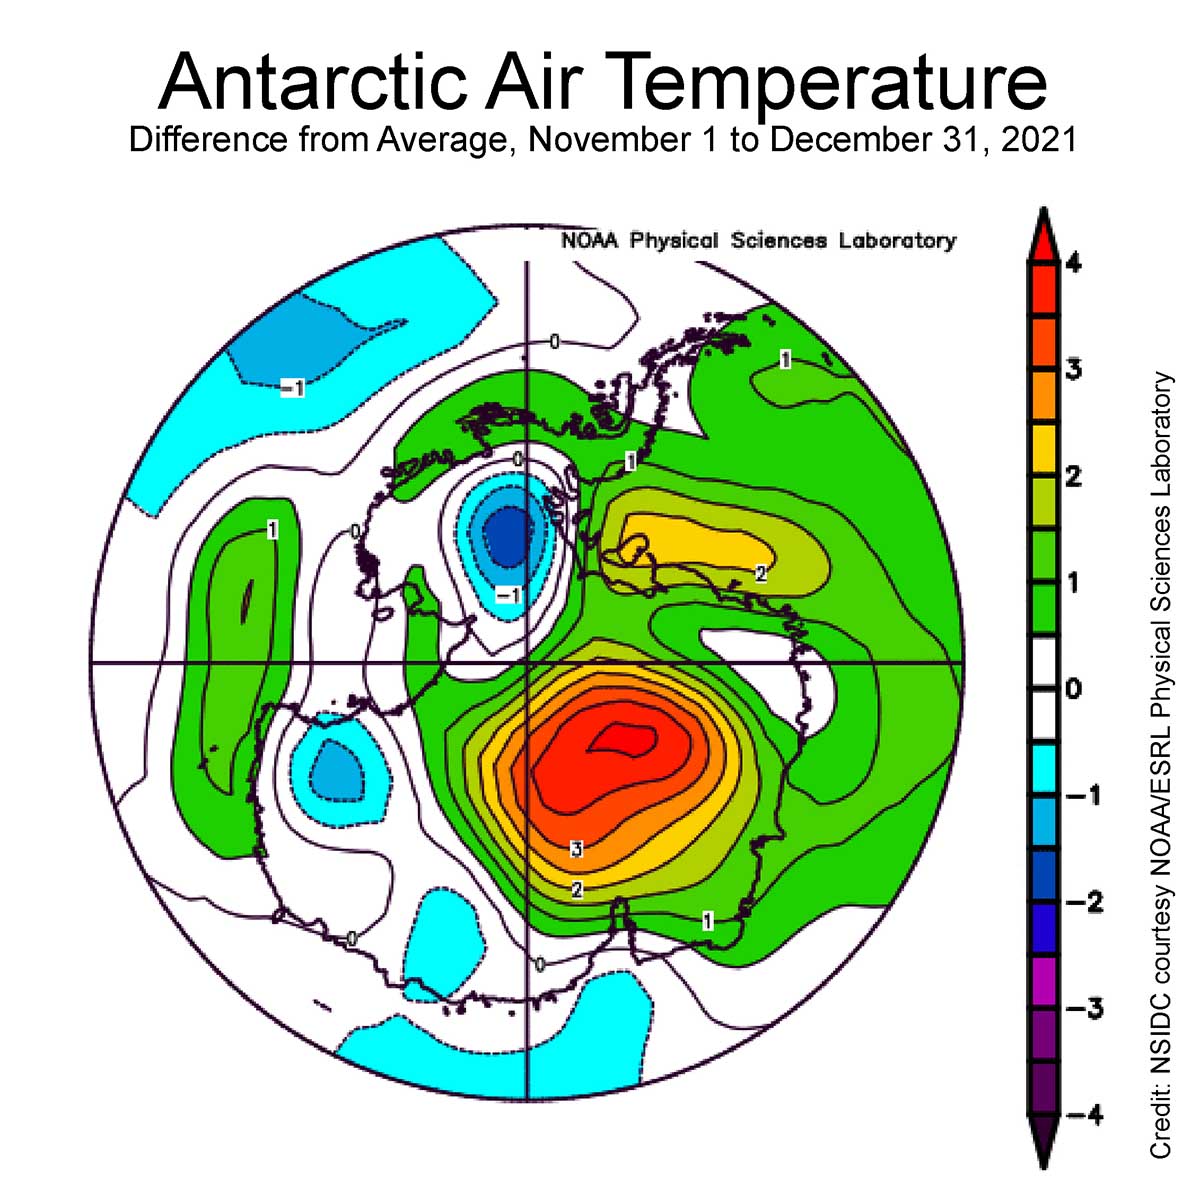 powerful-heat-wave-affecting-antarctic-continent-unprecedented-temperatures-40-degrees-above-average-temperature1